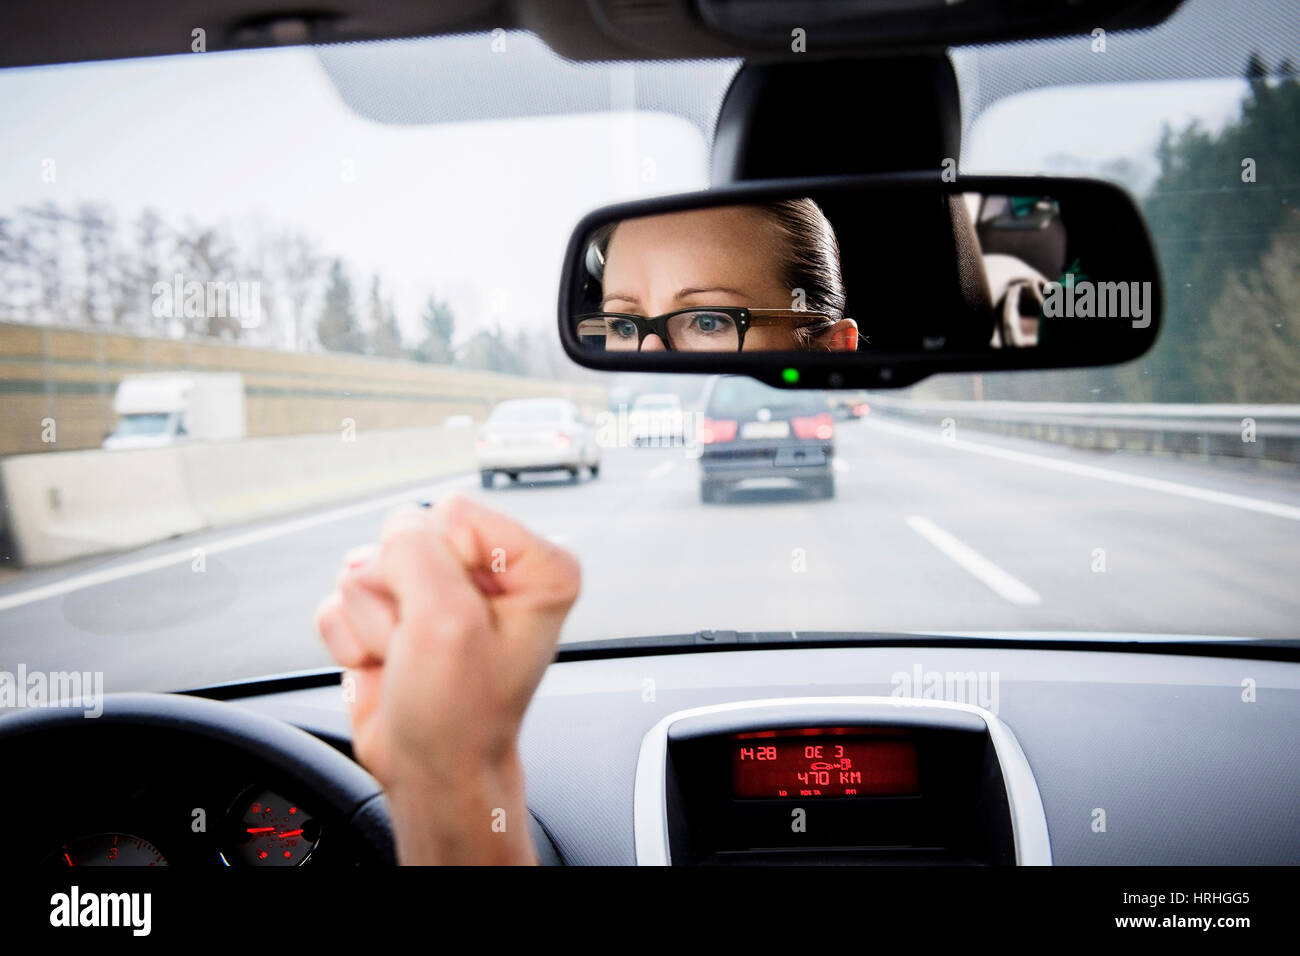 Frau aergert sich waehrend der Autofahrt - angry car driver Stock Photo